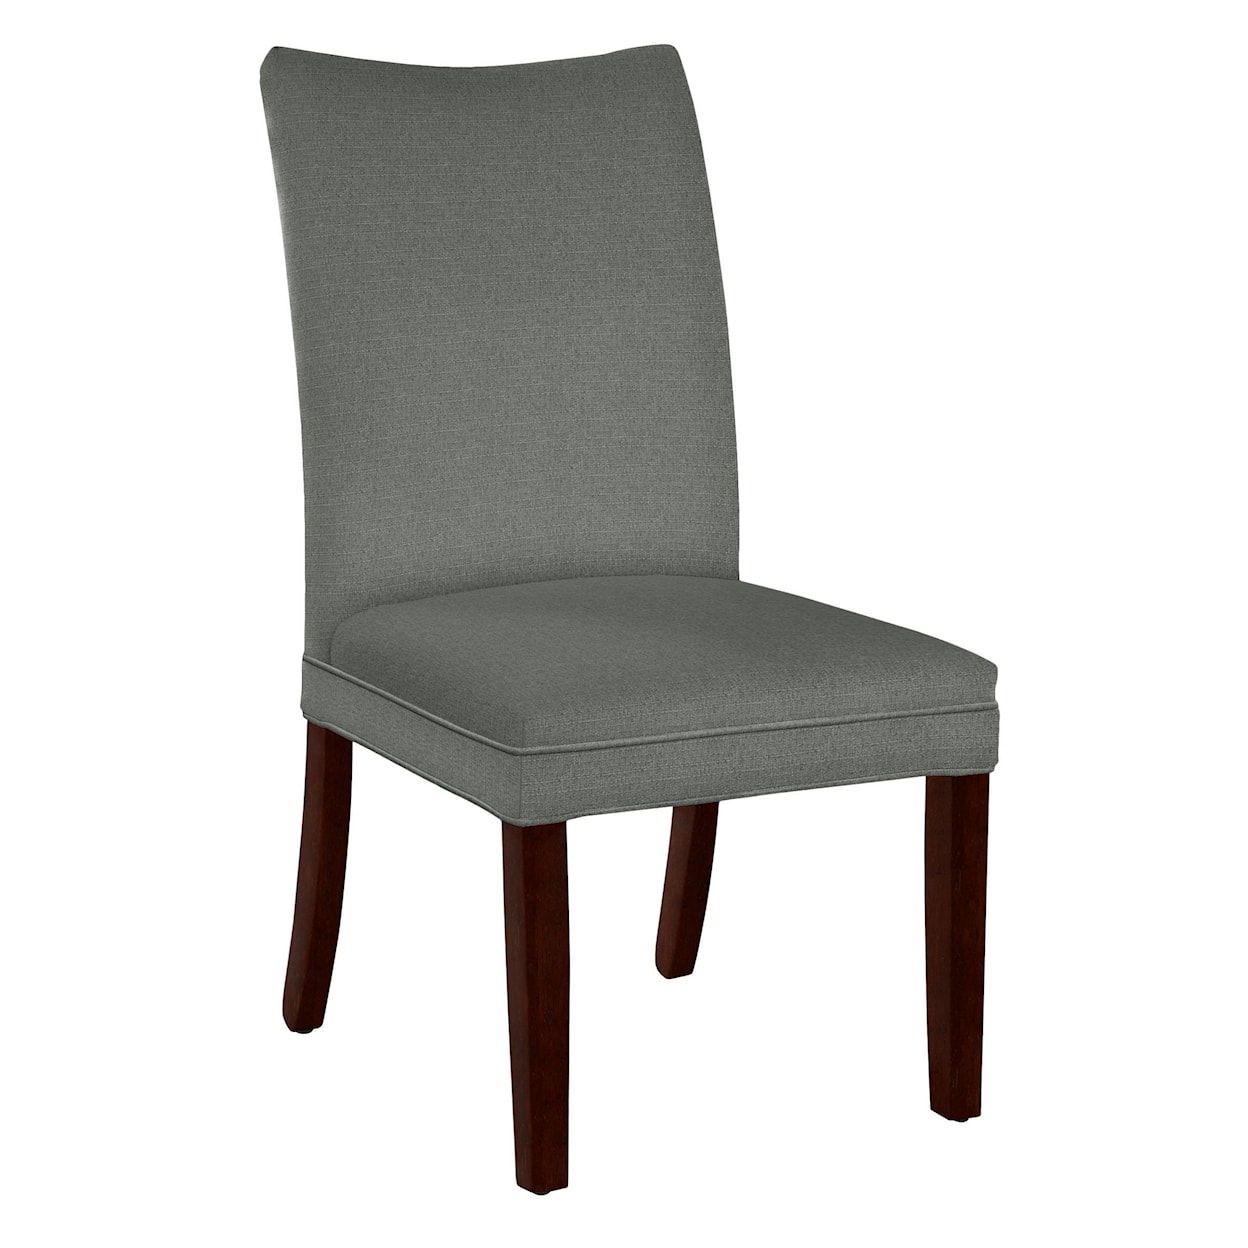 Hekman Upholstery Jordan Dining Chair